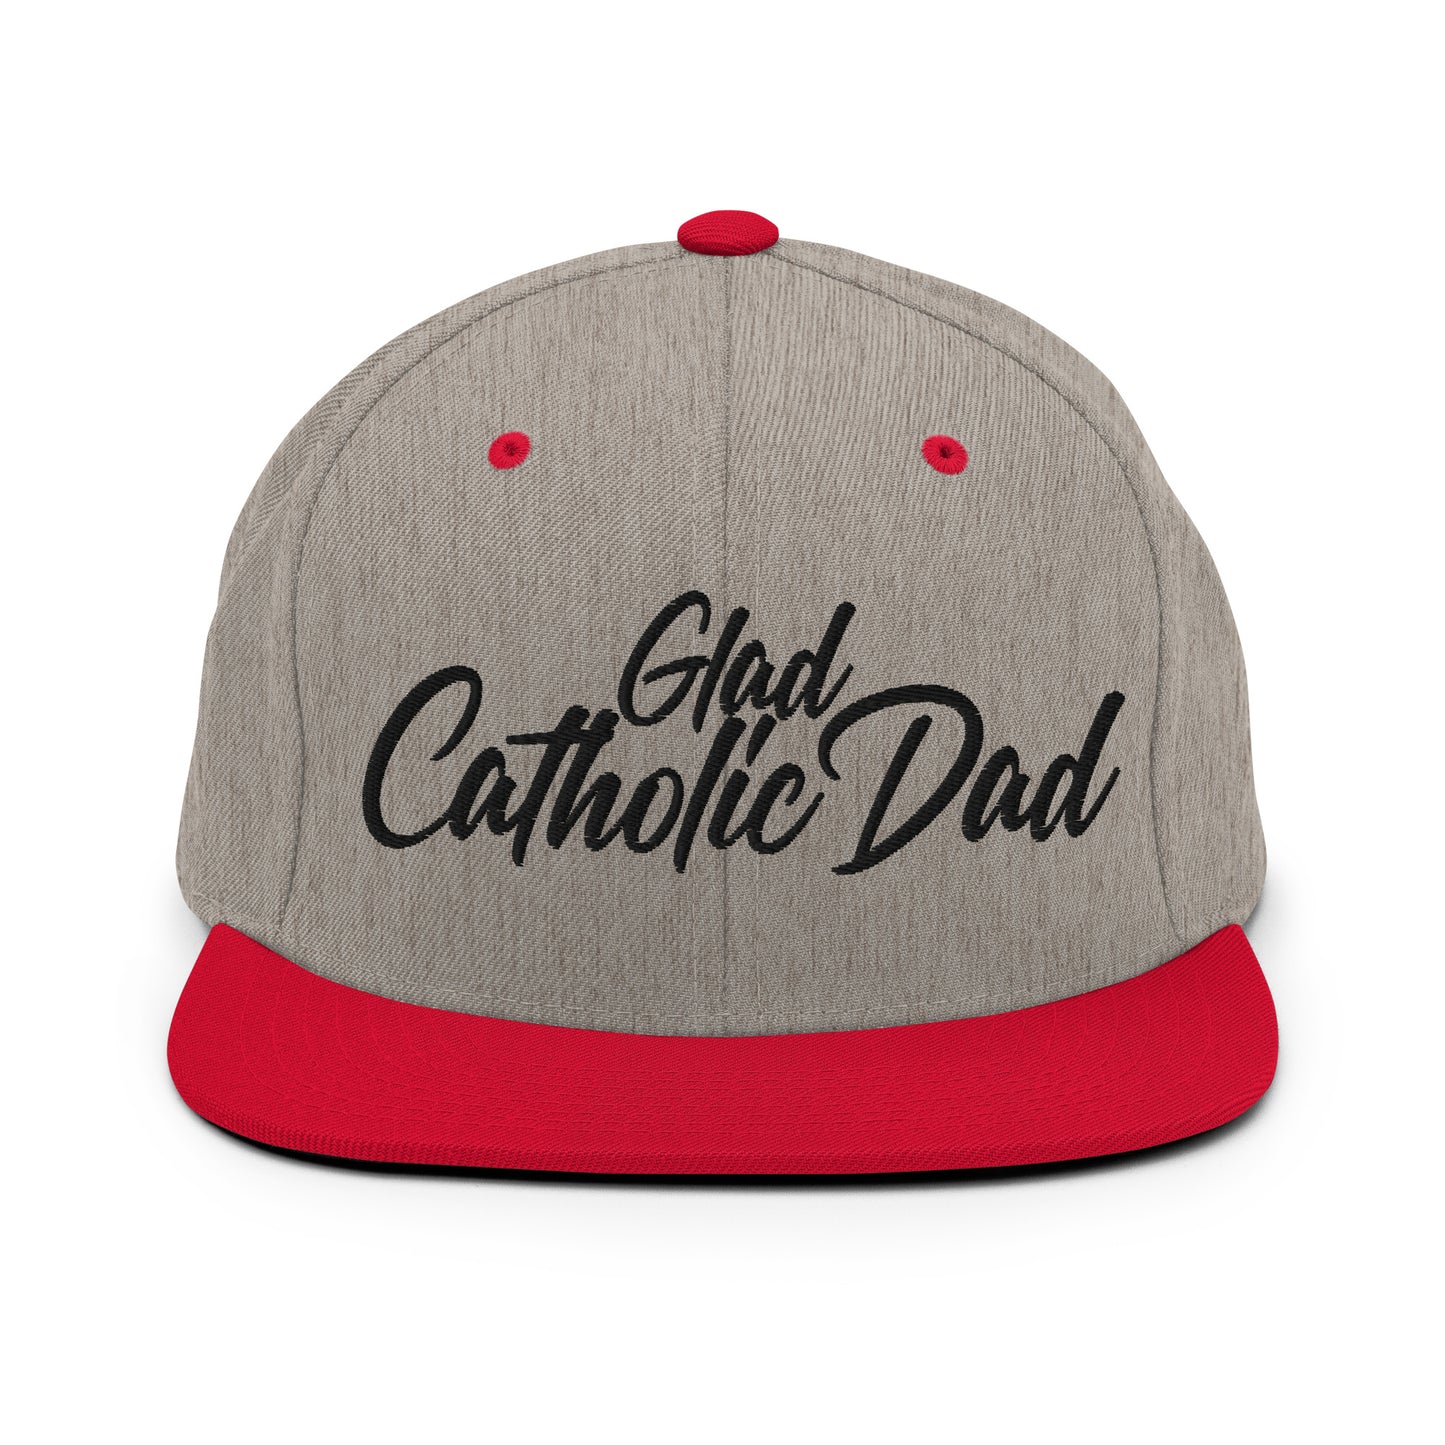 Glad Cathoic Dads - Snapback Hat